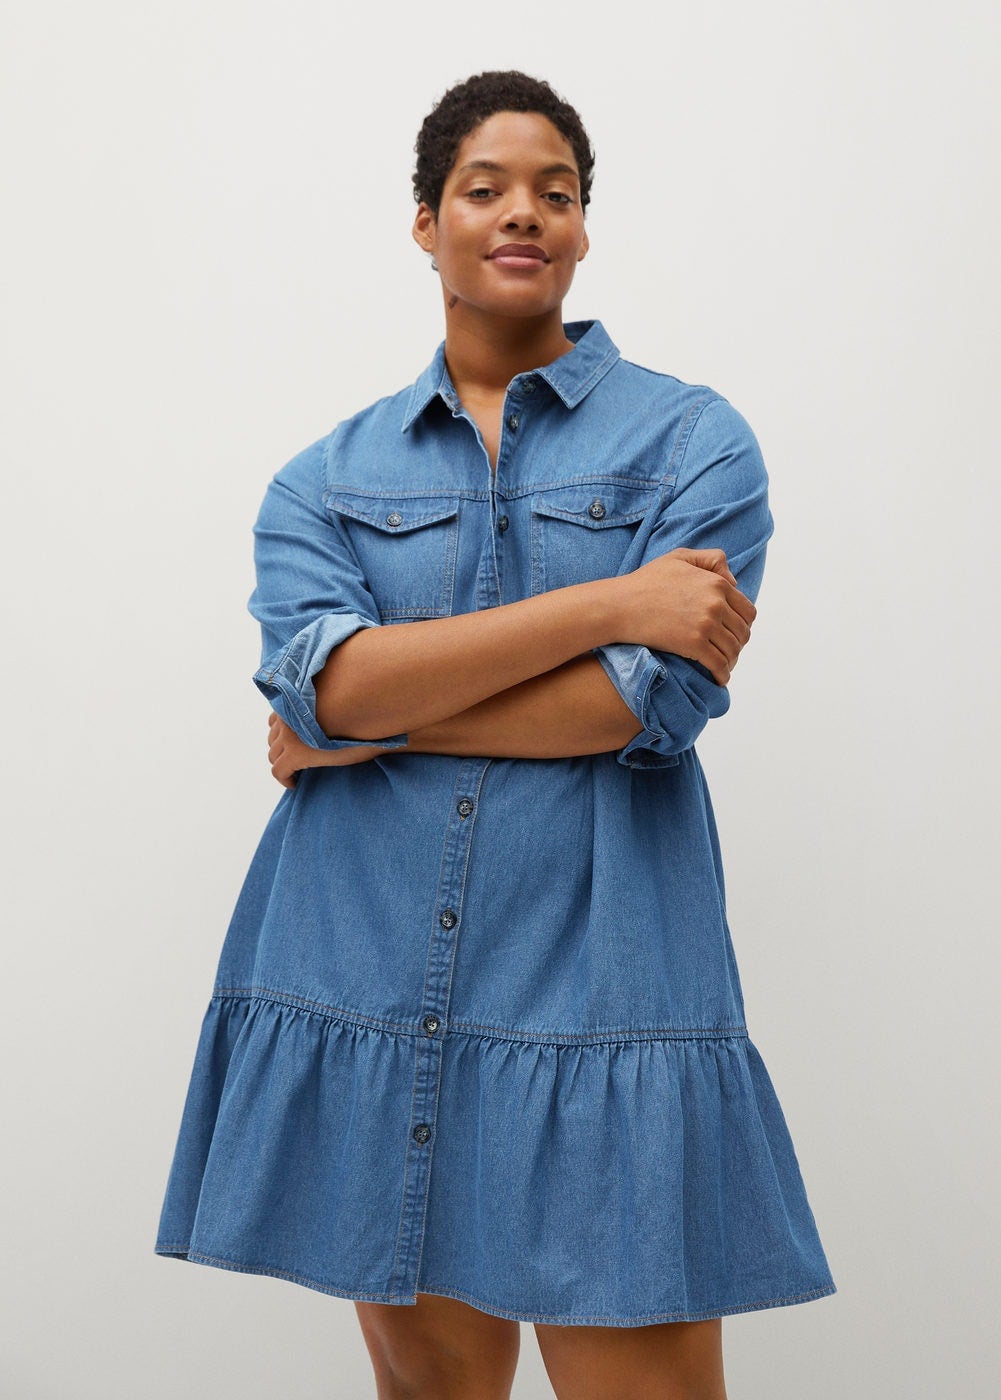 Women's Clothing - adidas Originals x KSENIASCHNAIDER Fringed Shirt Dress -  Blue | adidas Oman